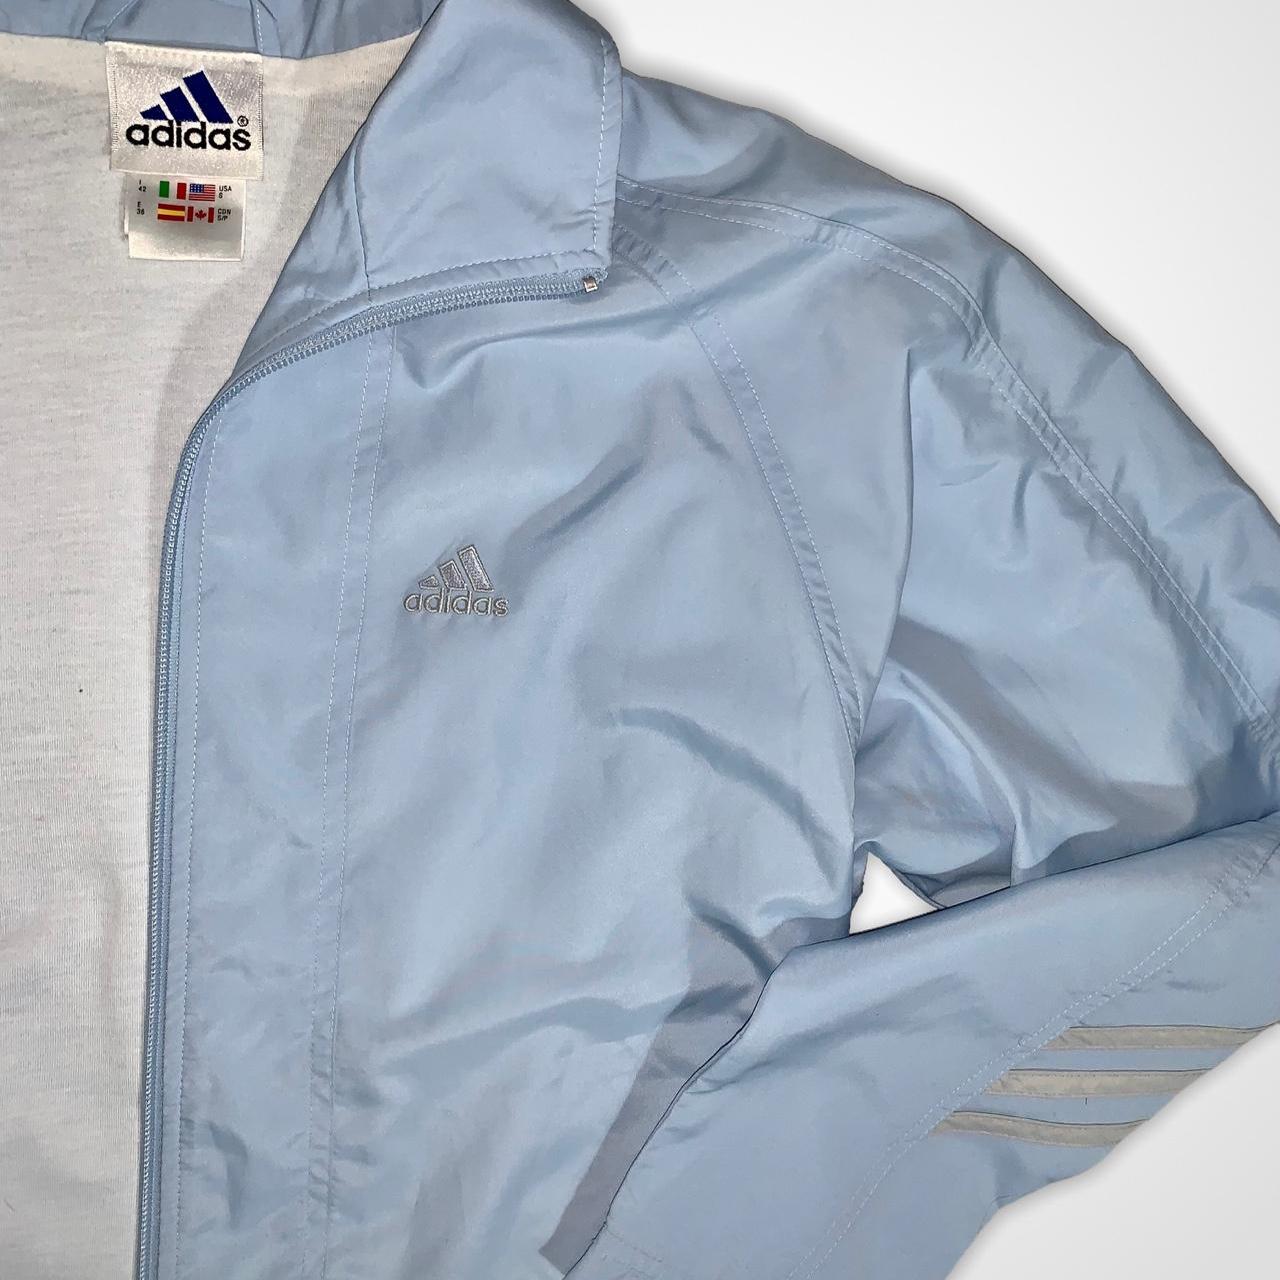 Vintage 90s Adidas deadstock zip up water resistant windbreaker jacket